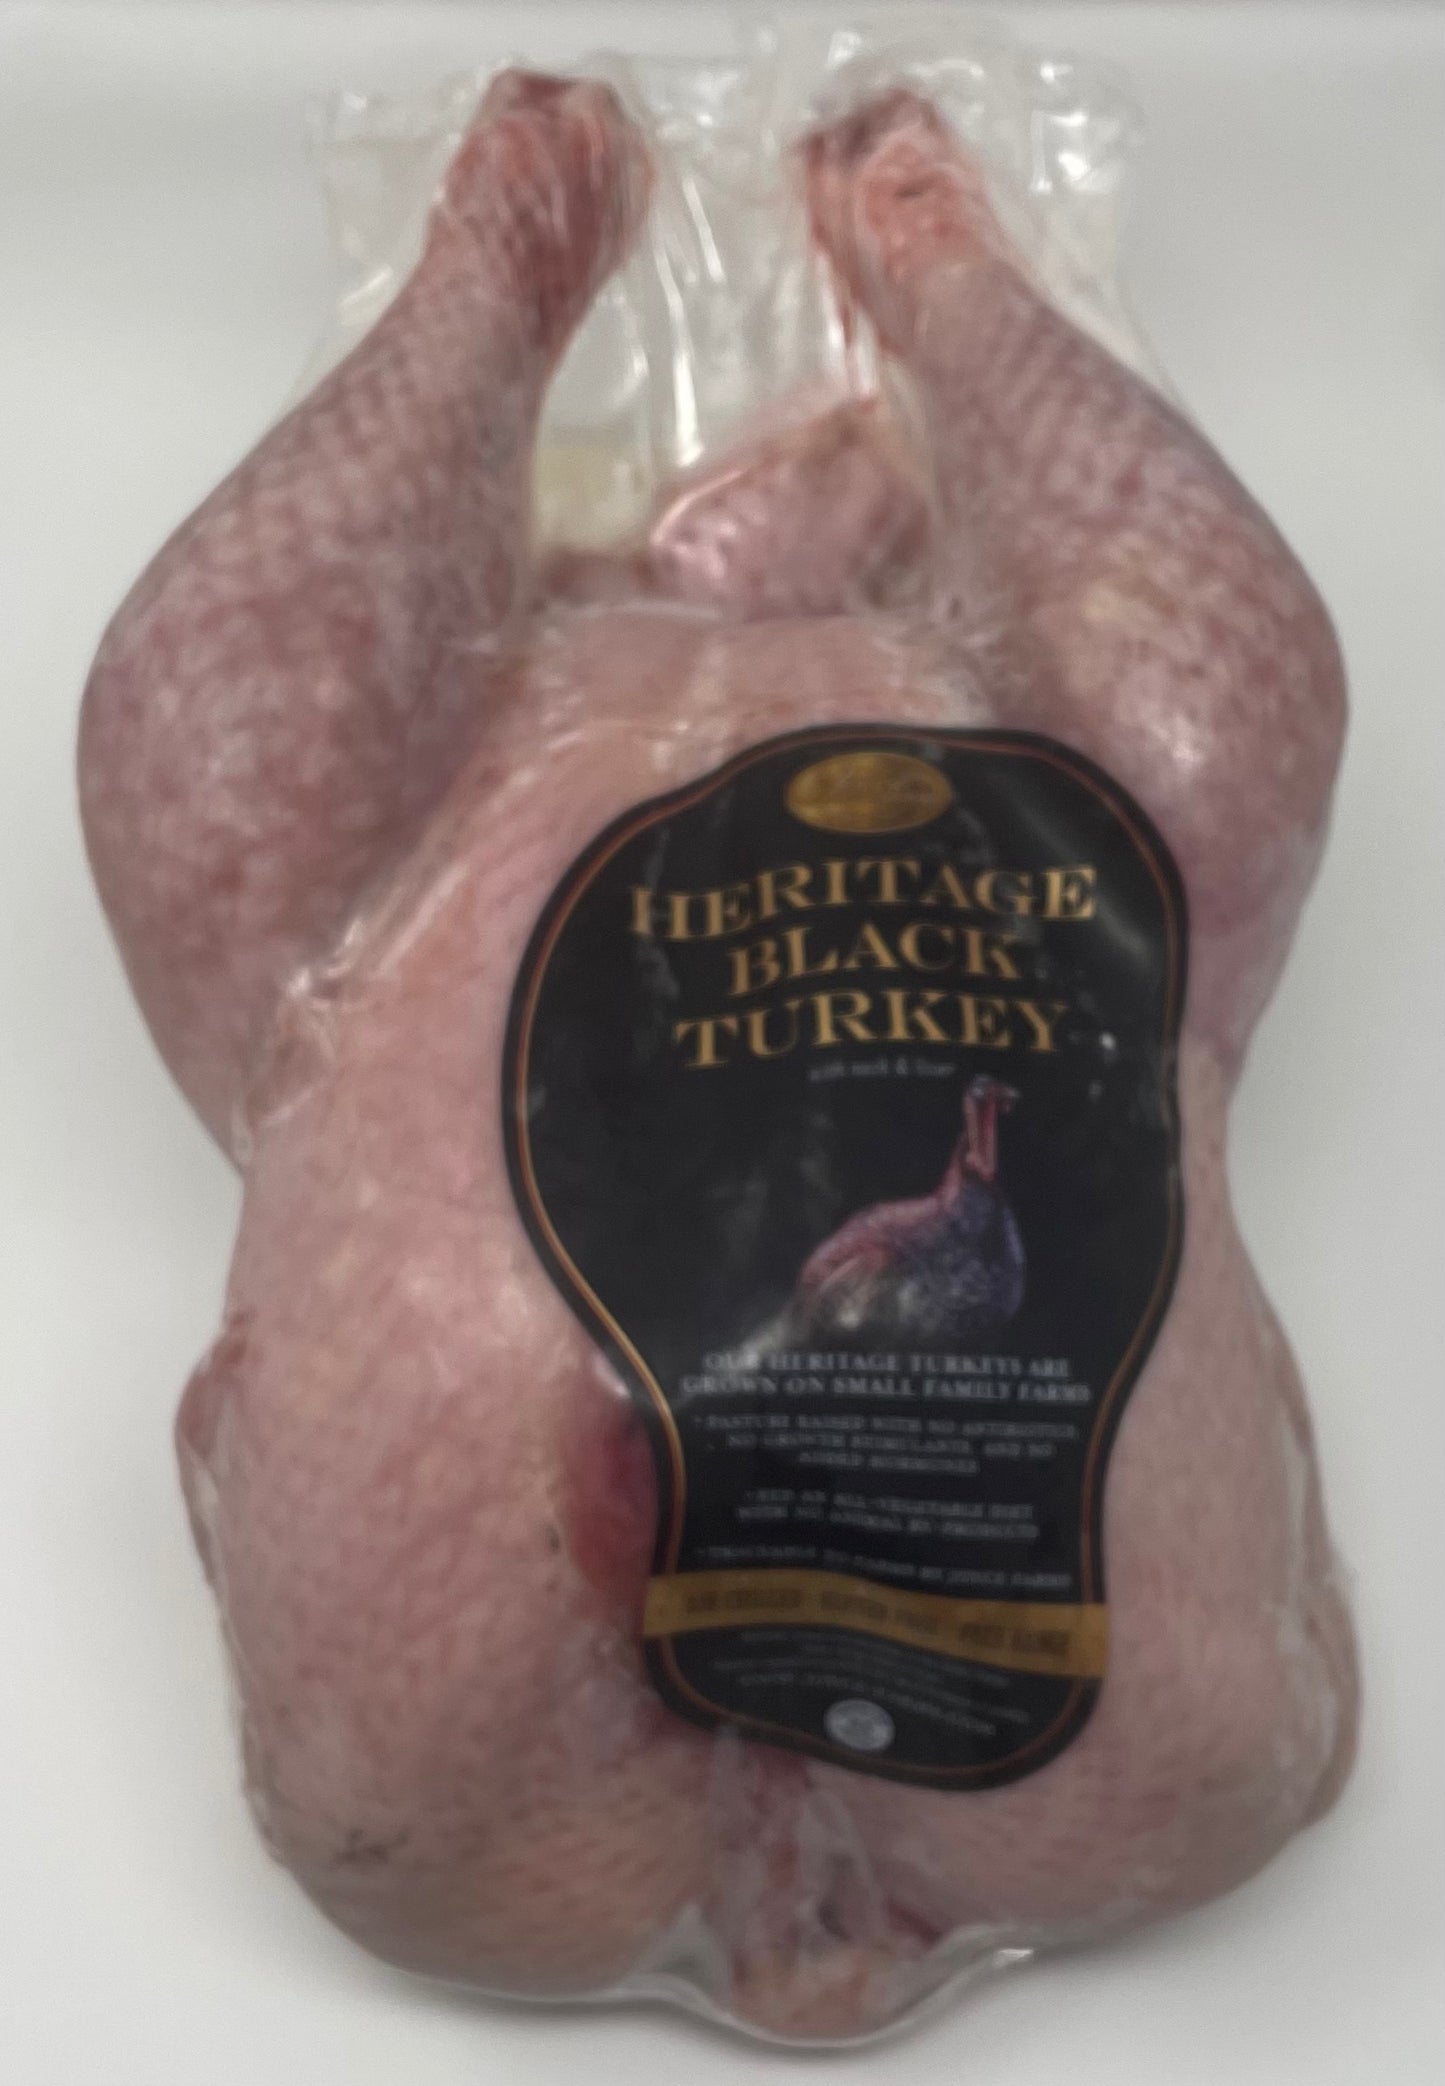 Heritage Black Turkey- Joyce Farms